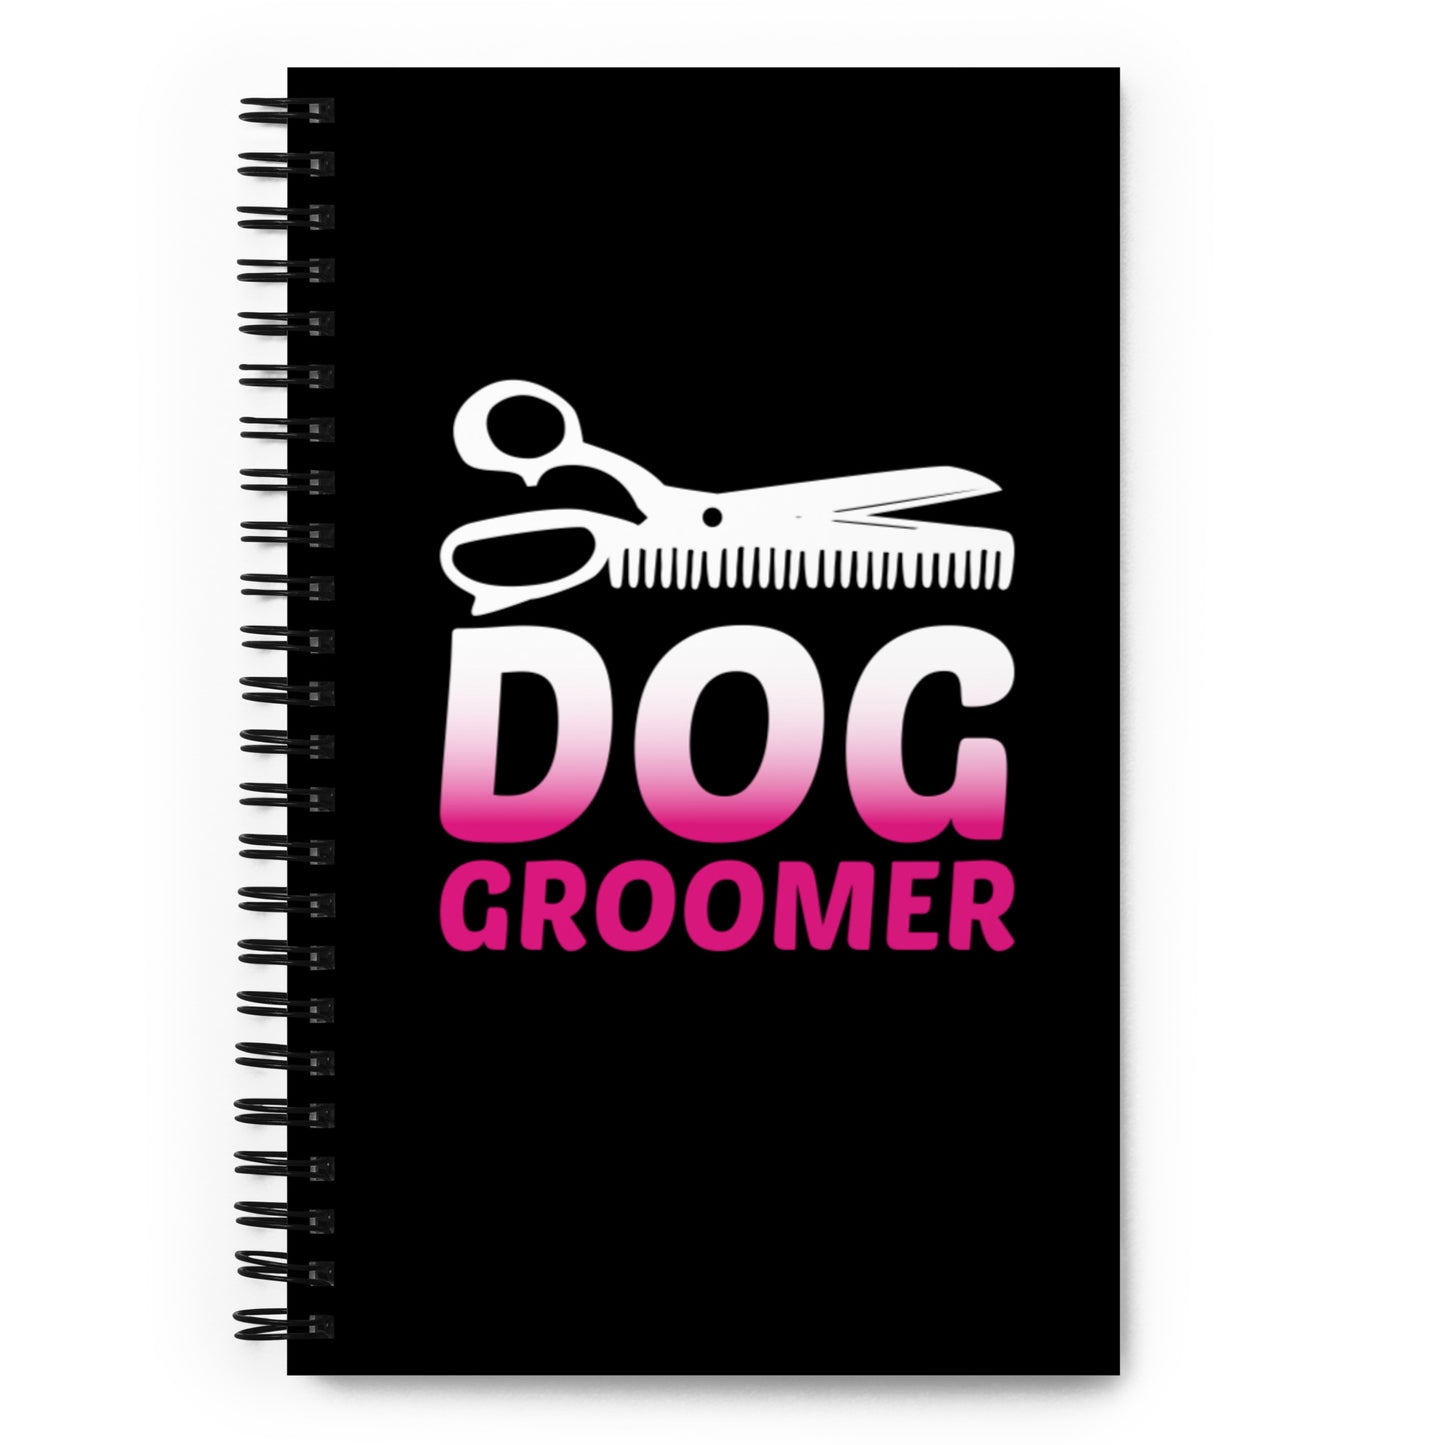 Dog Groomer Spiral notebook